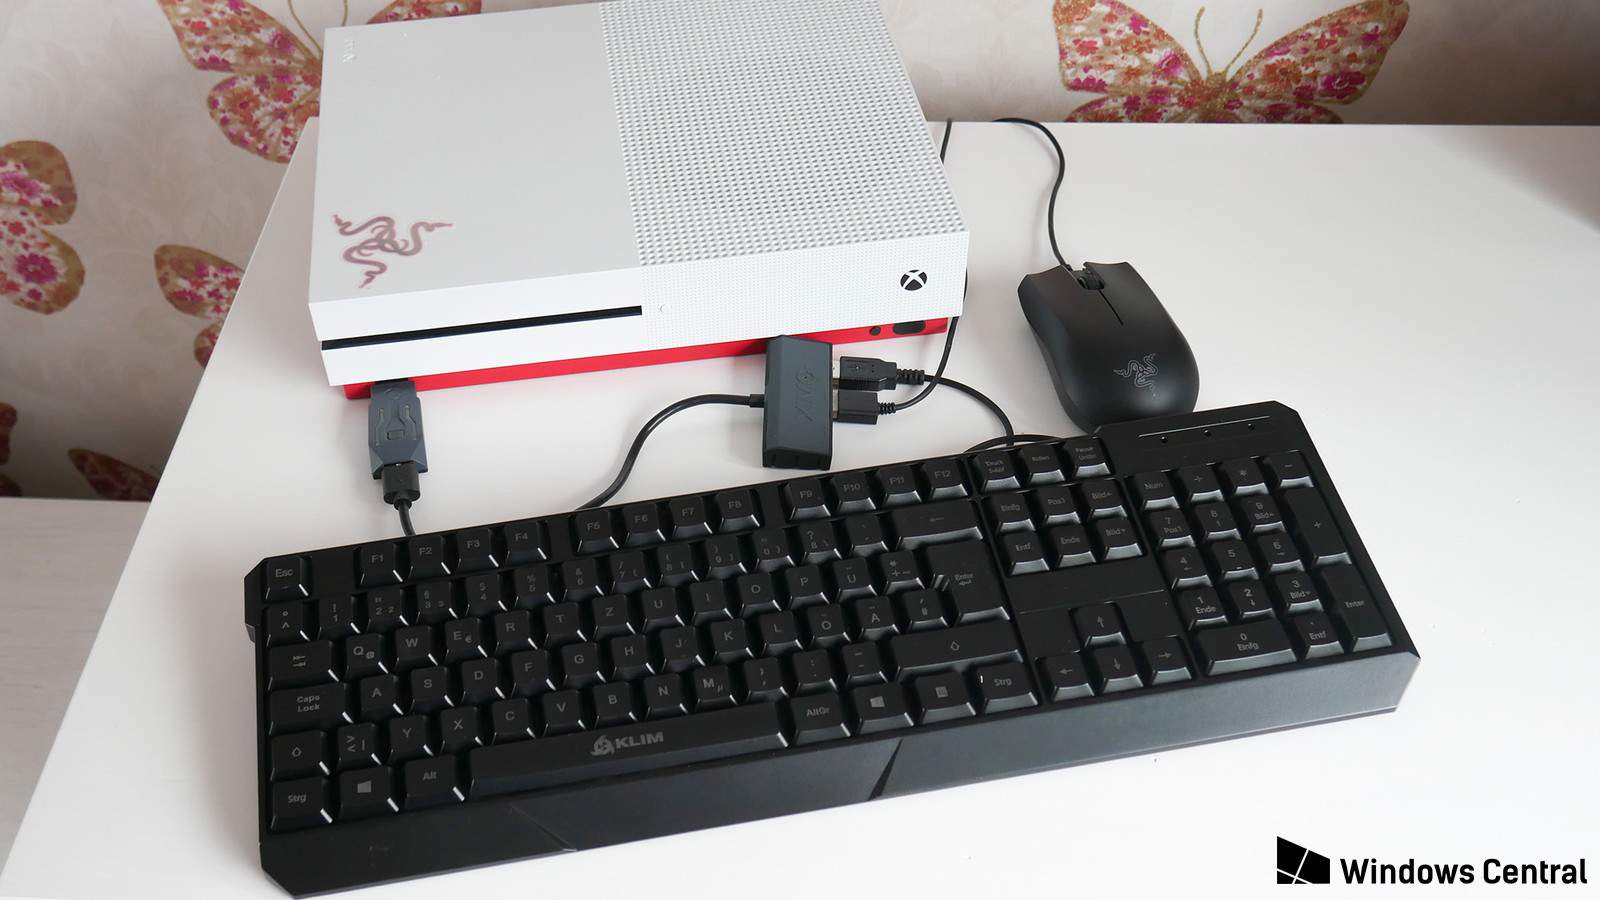 Xbox and keyboard